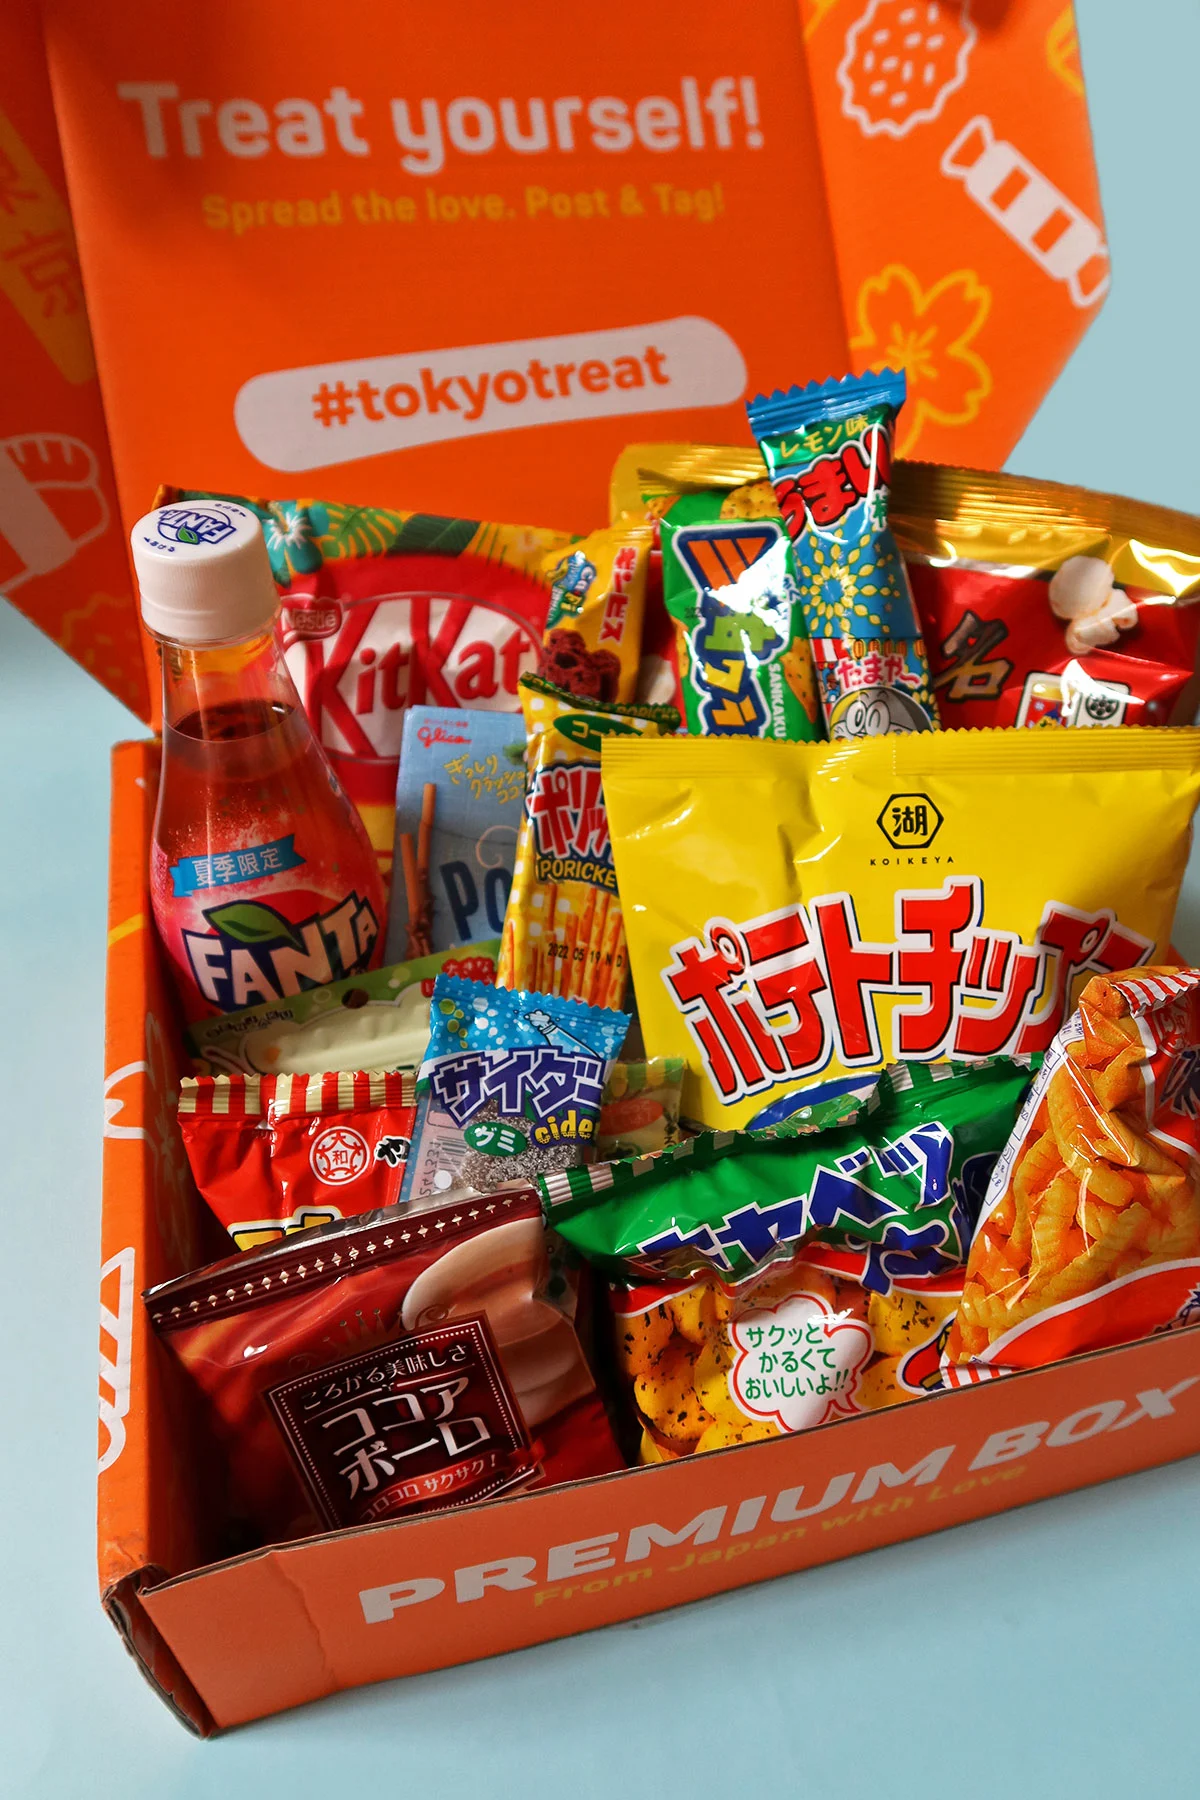 Tokyotreat Box Review